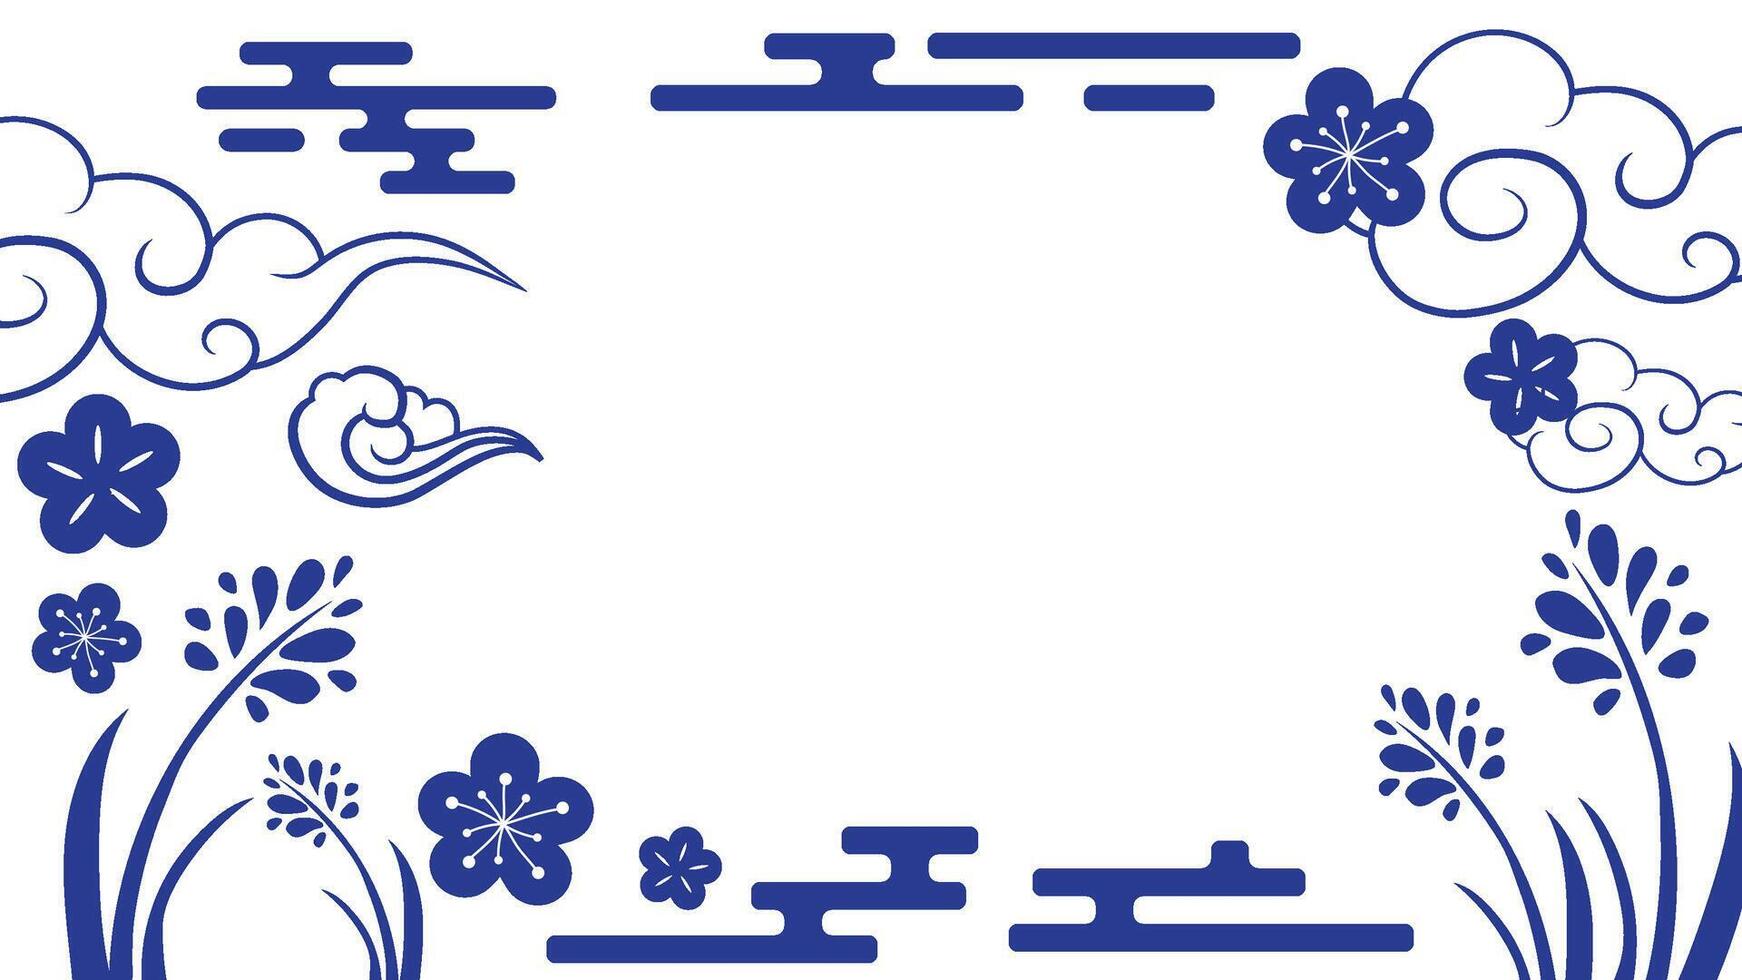 Abstract Japanese vector design background flower frame